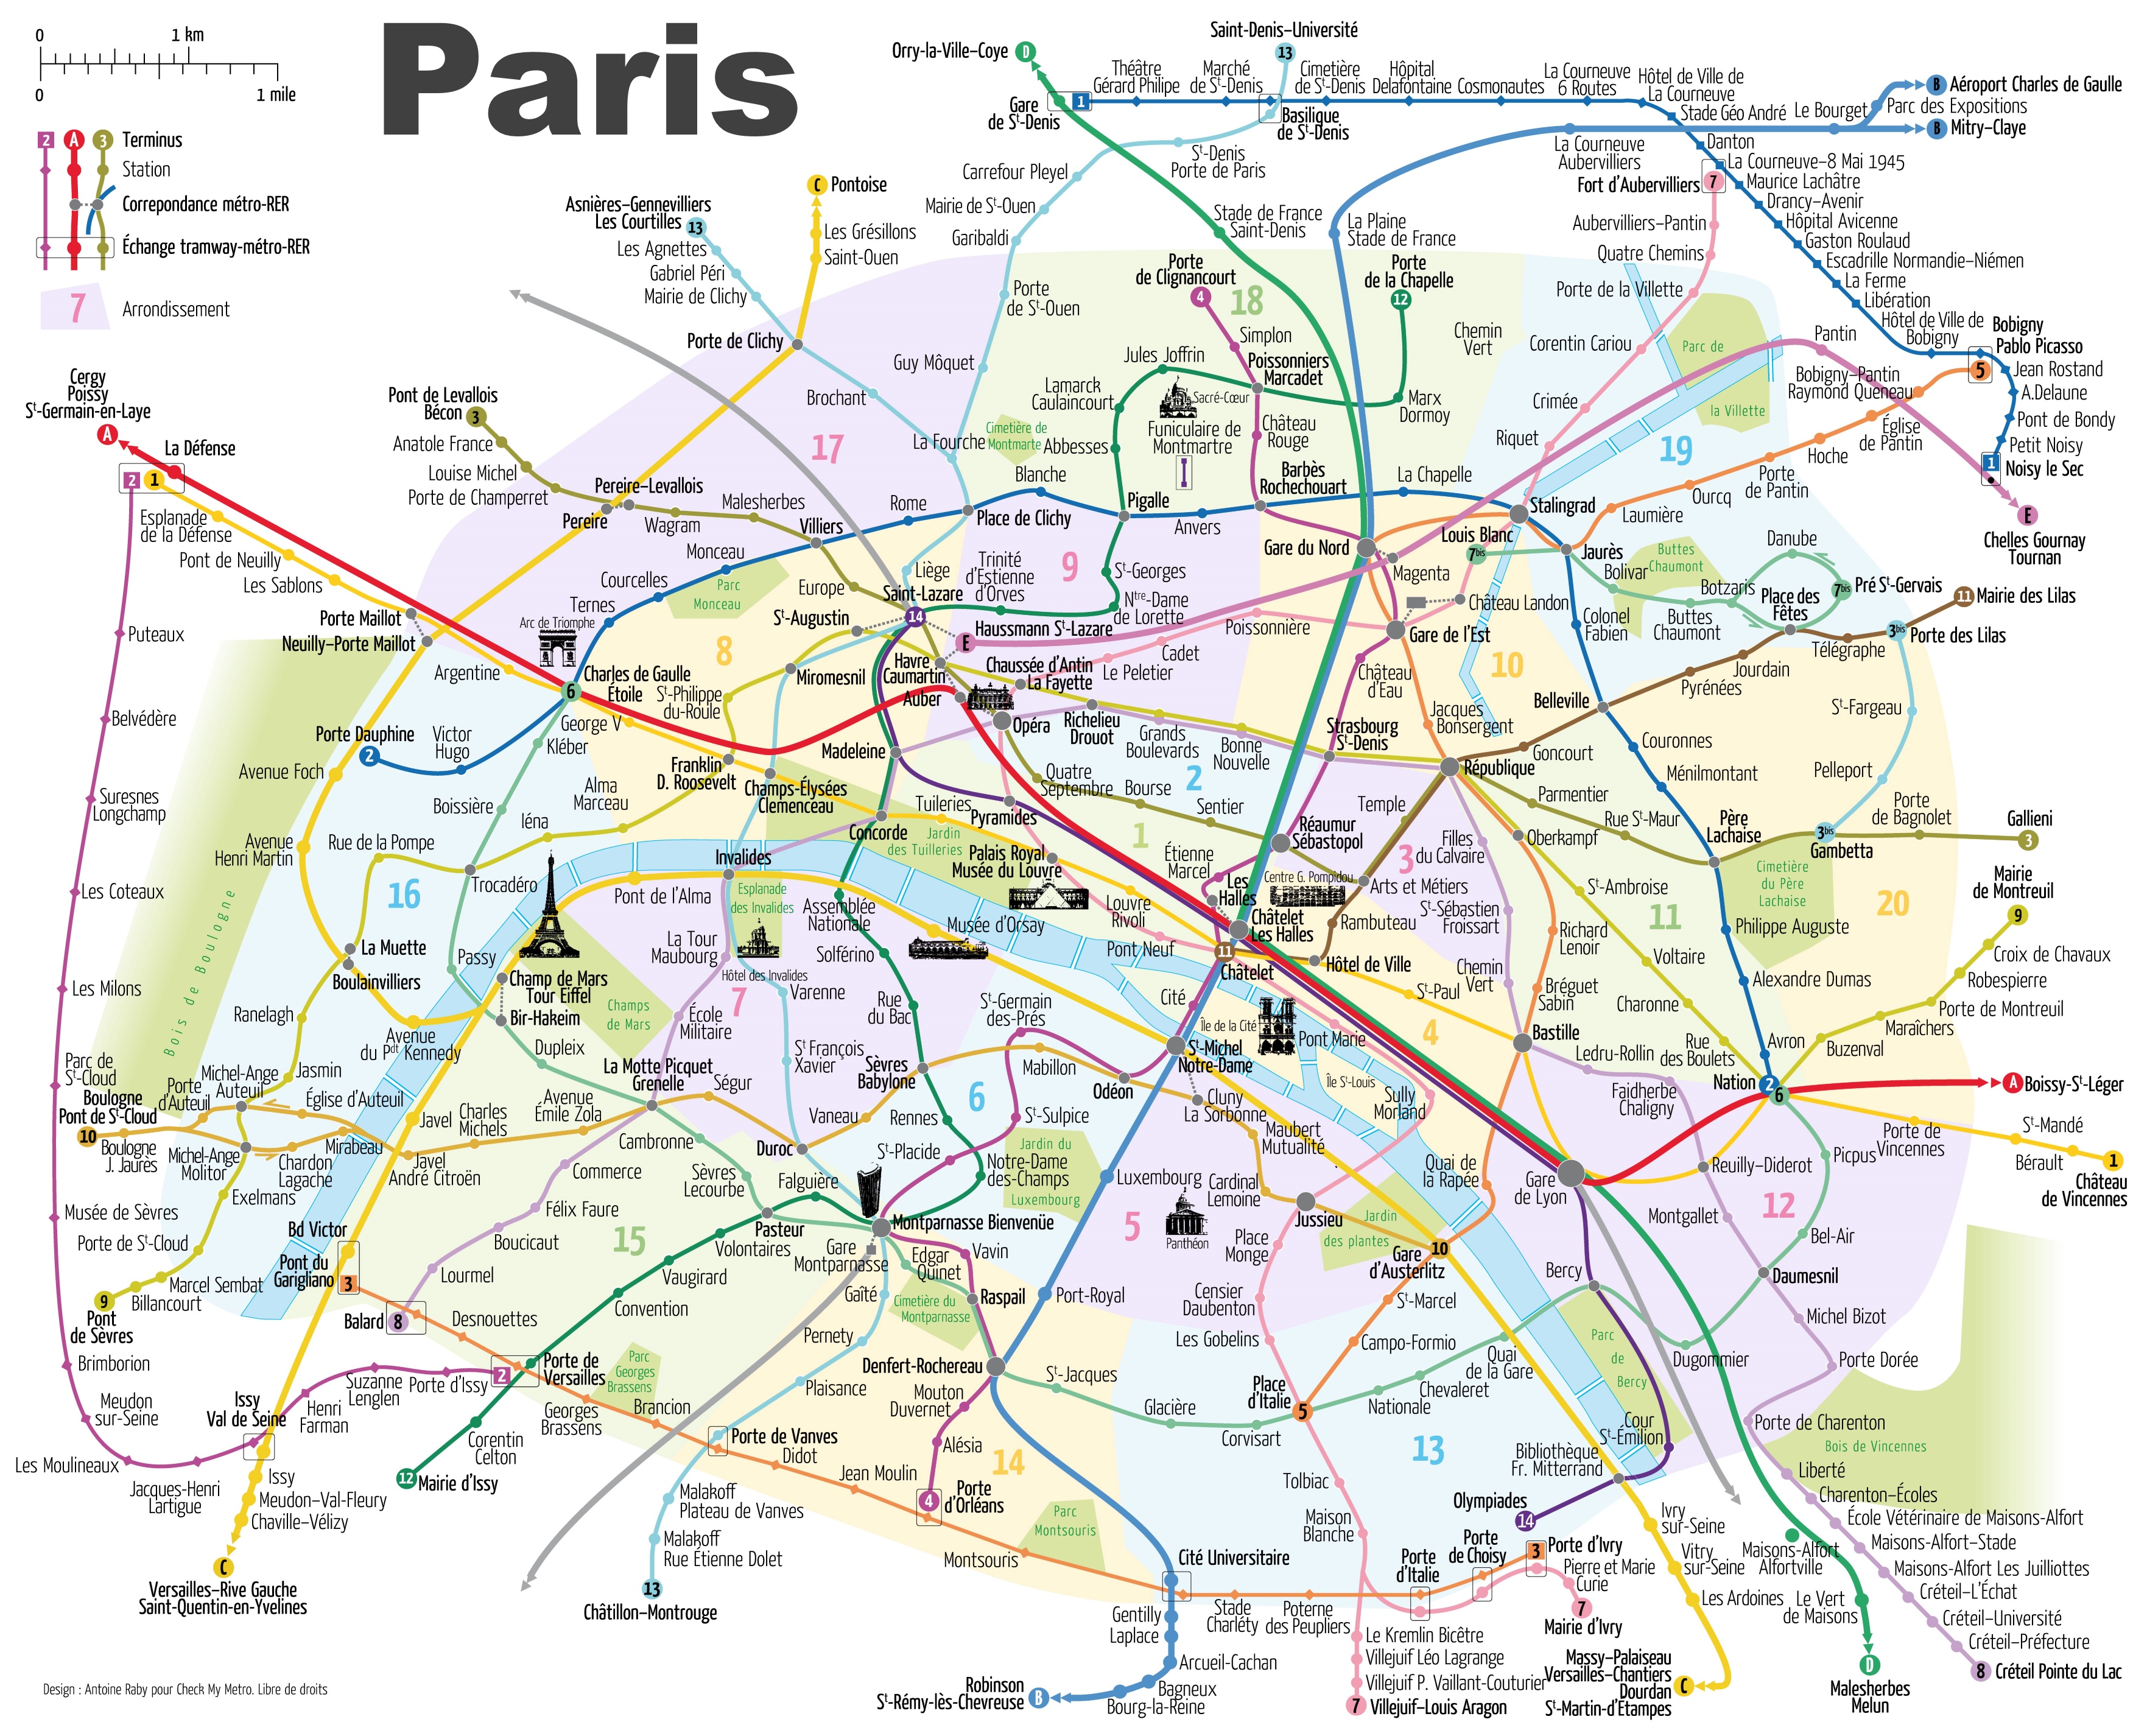 Du lịch Paris - Bản đồ tàu điện Paris